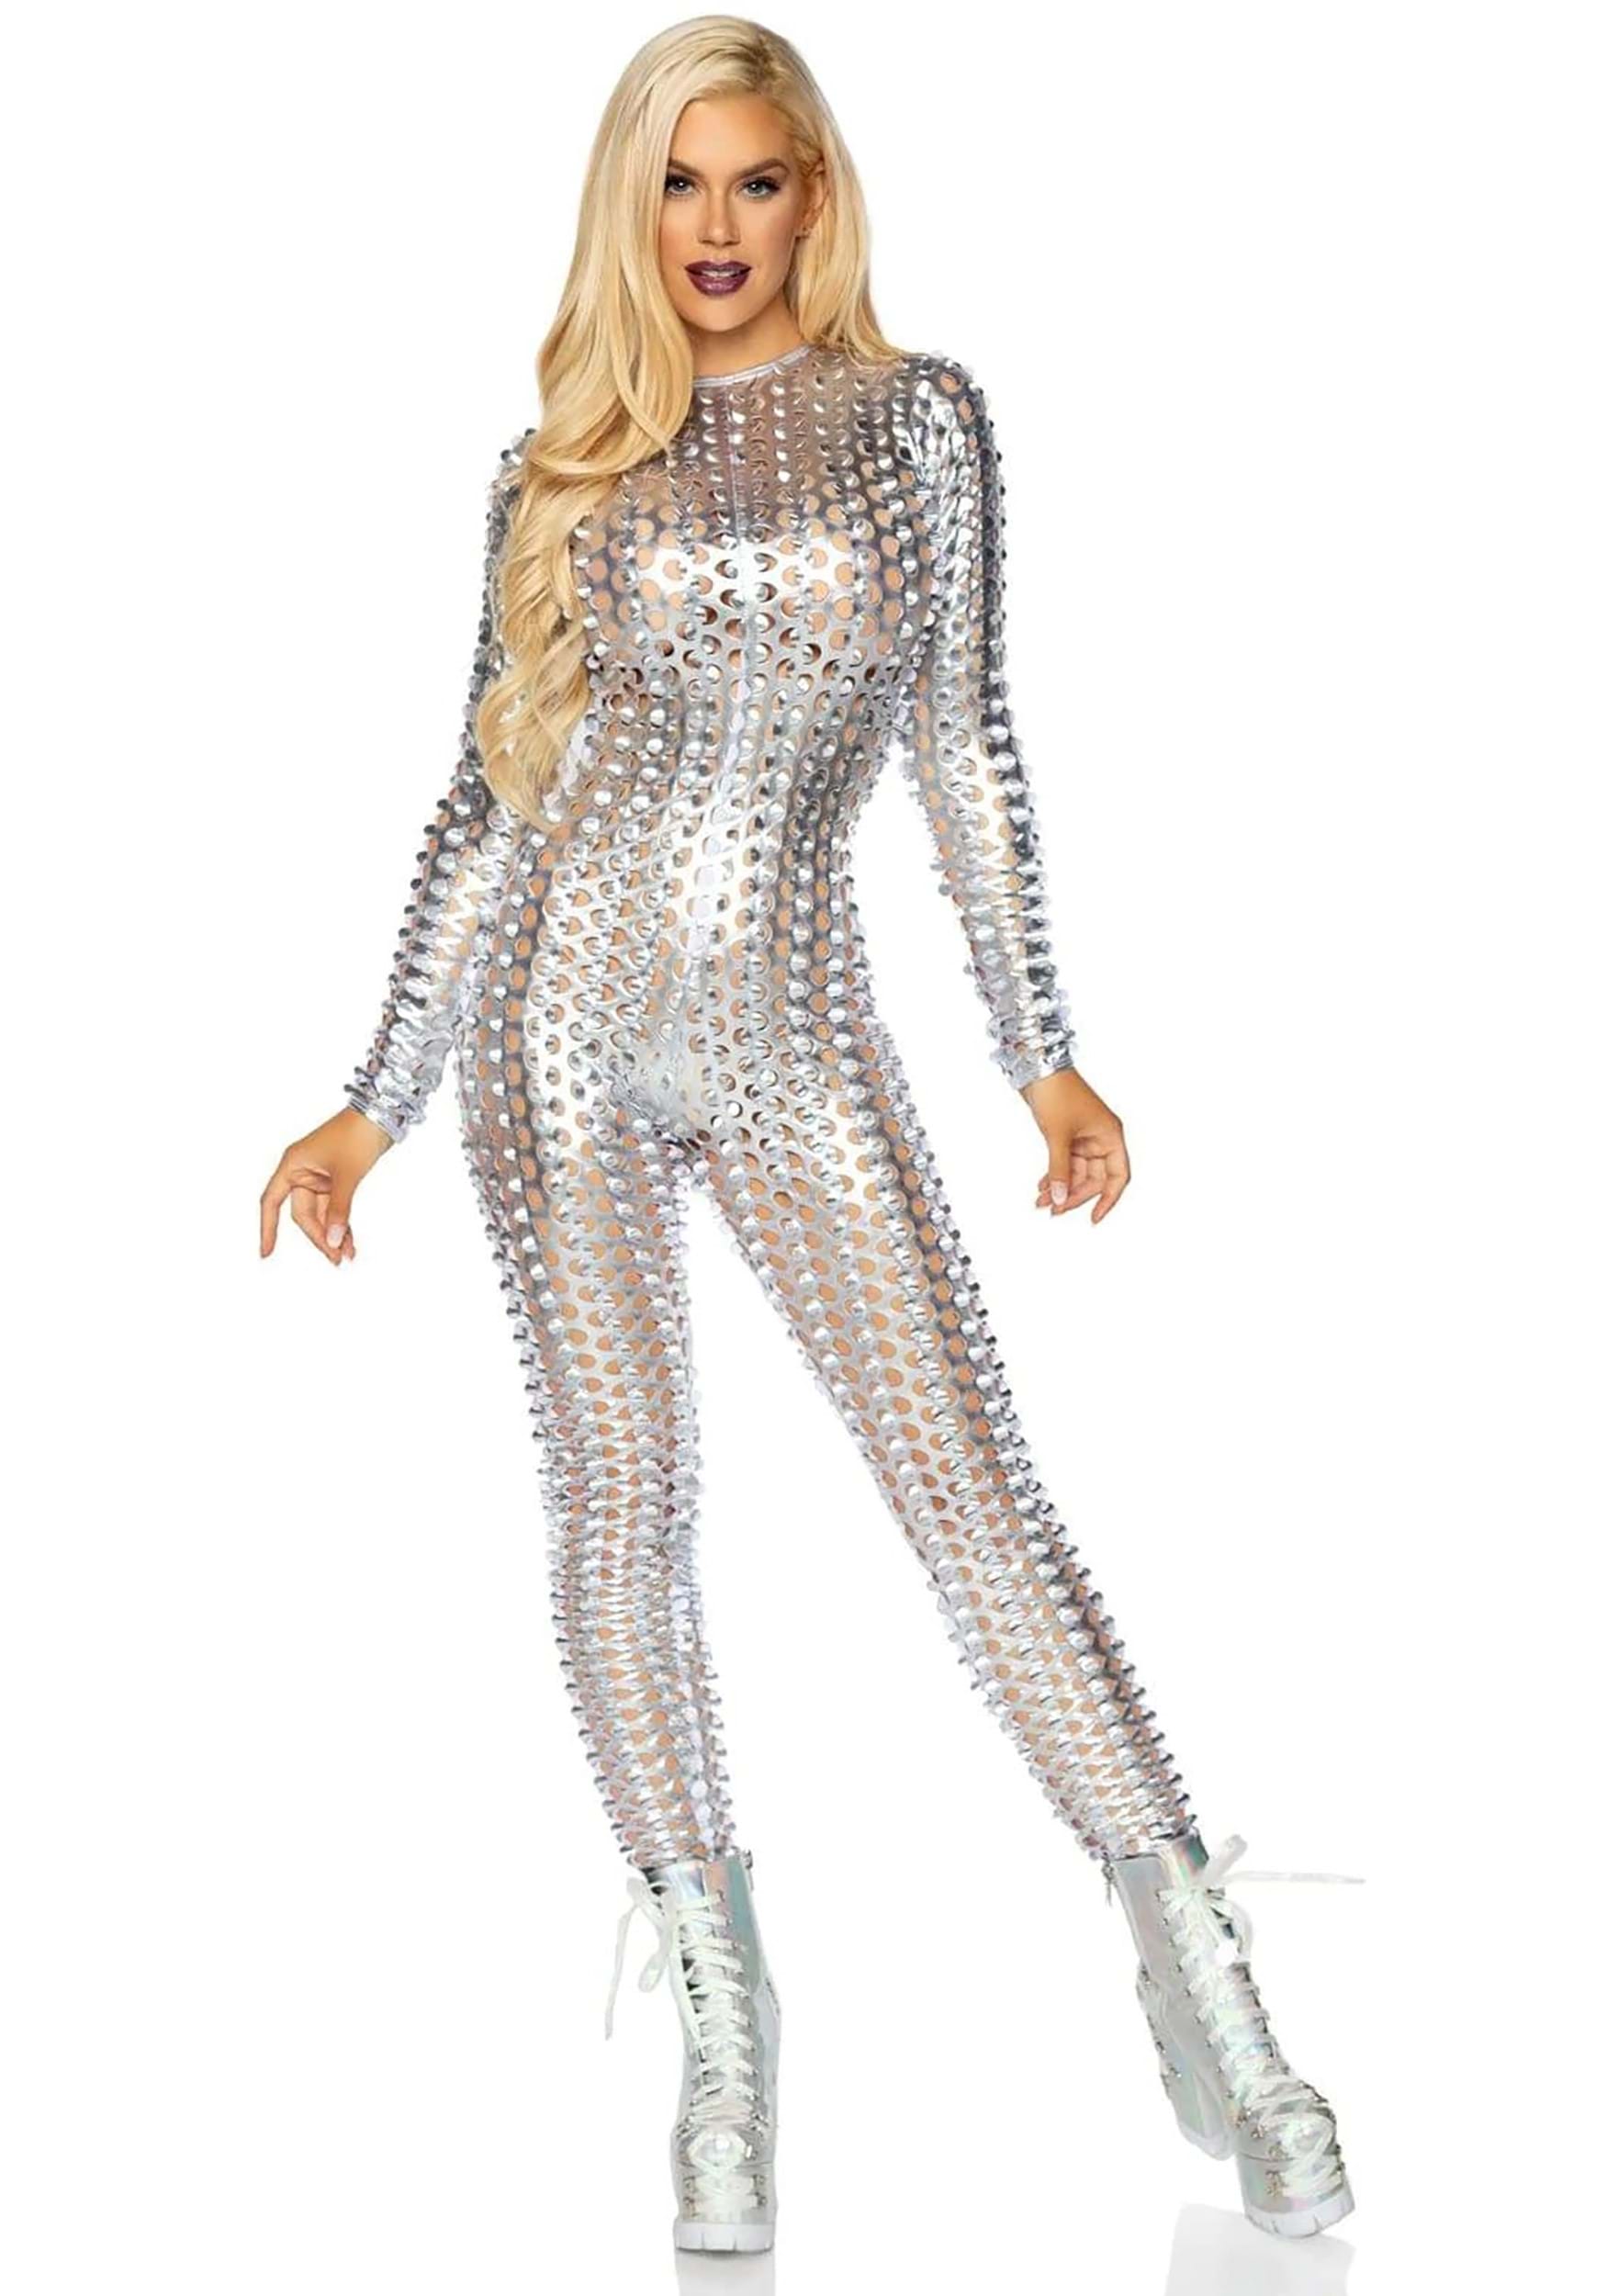 Silver Laser Cut Metallic Catsuit Women's Costume